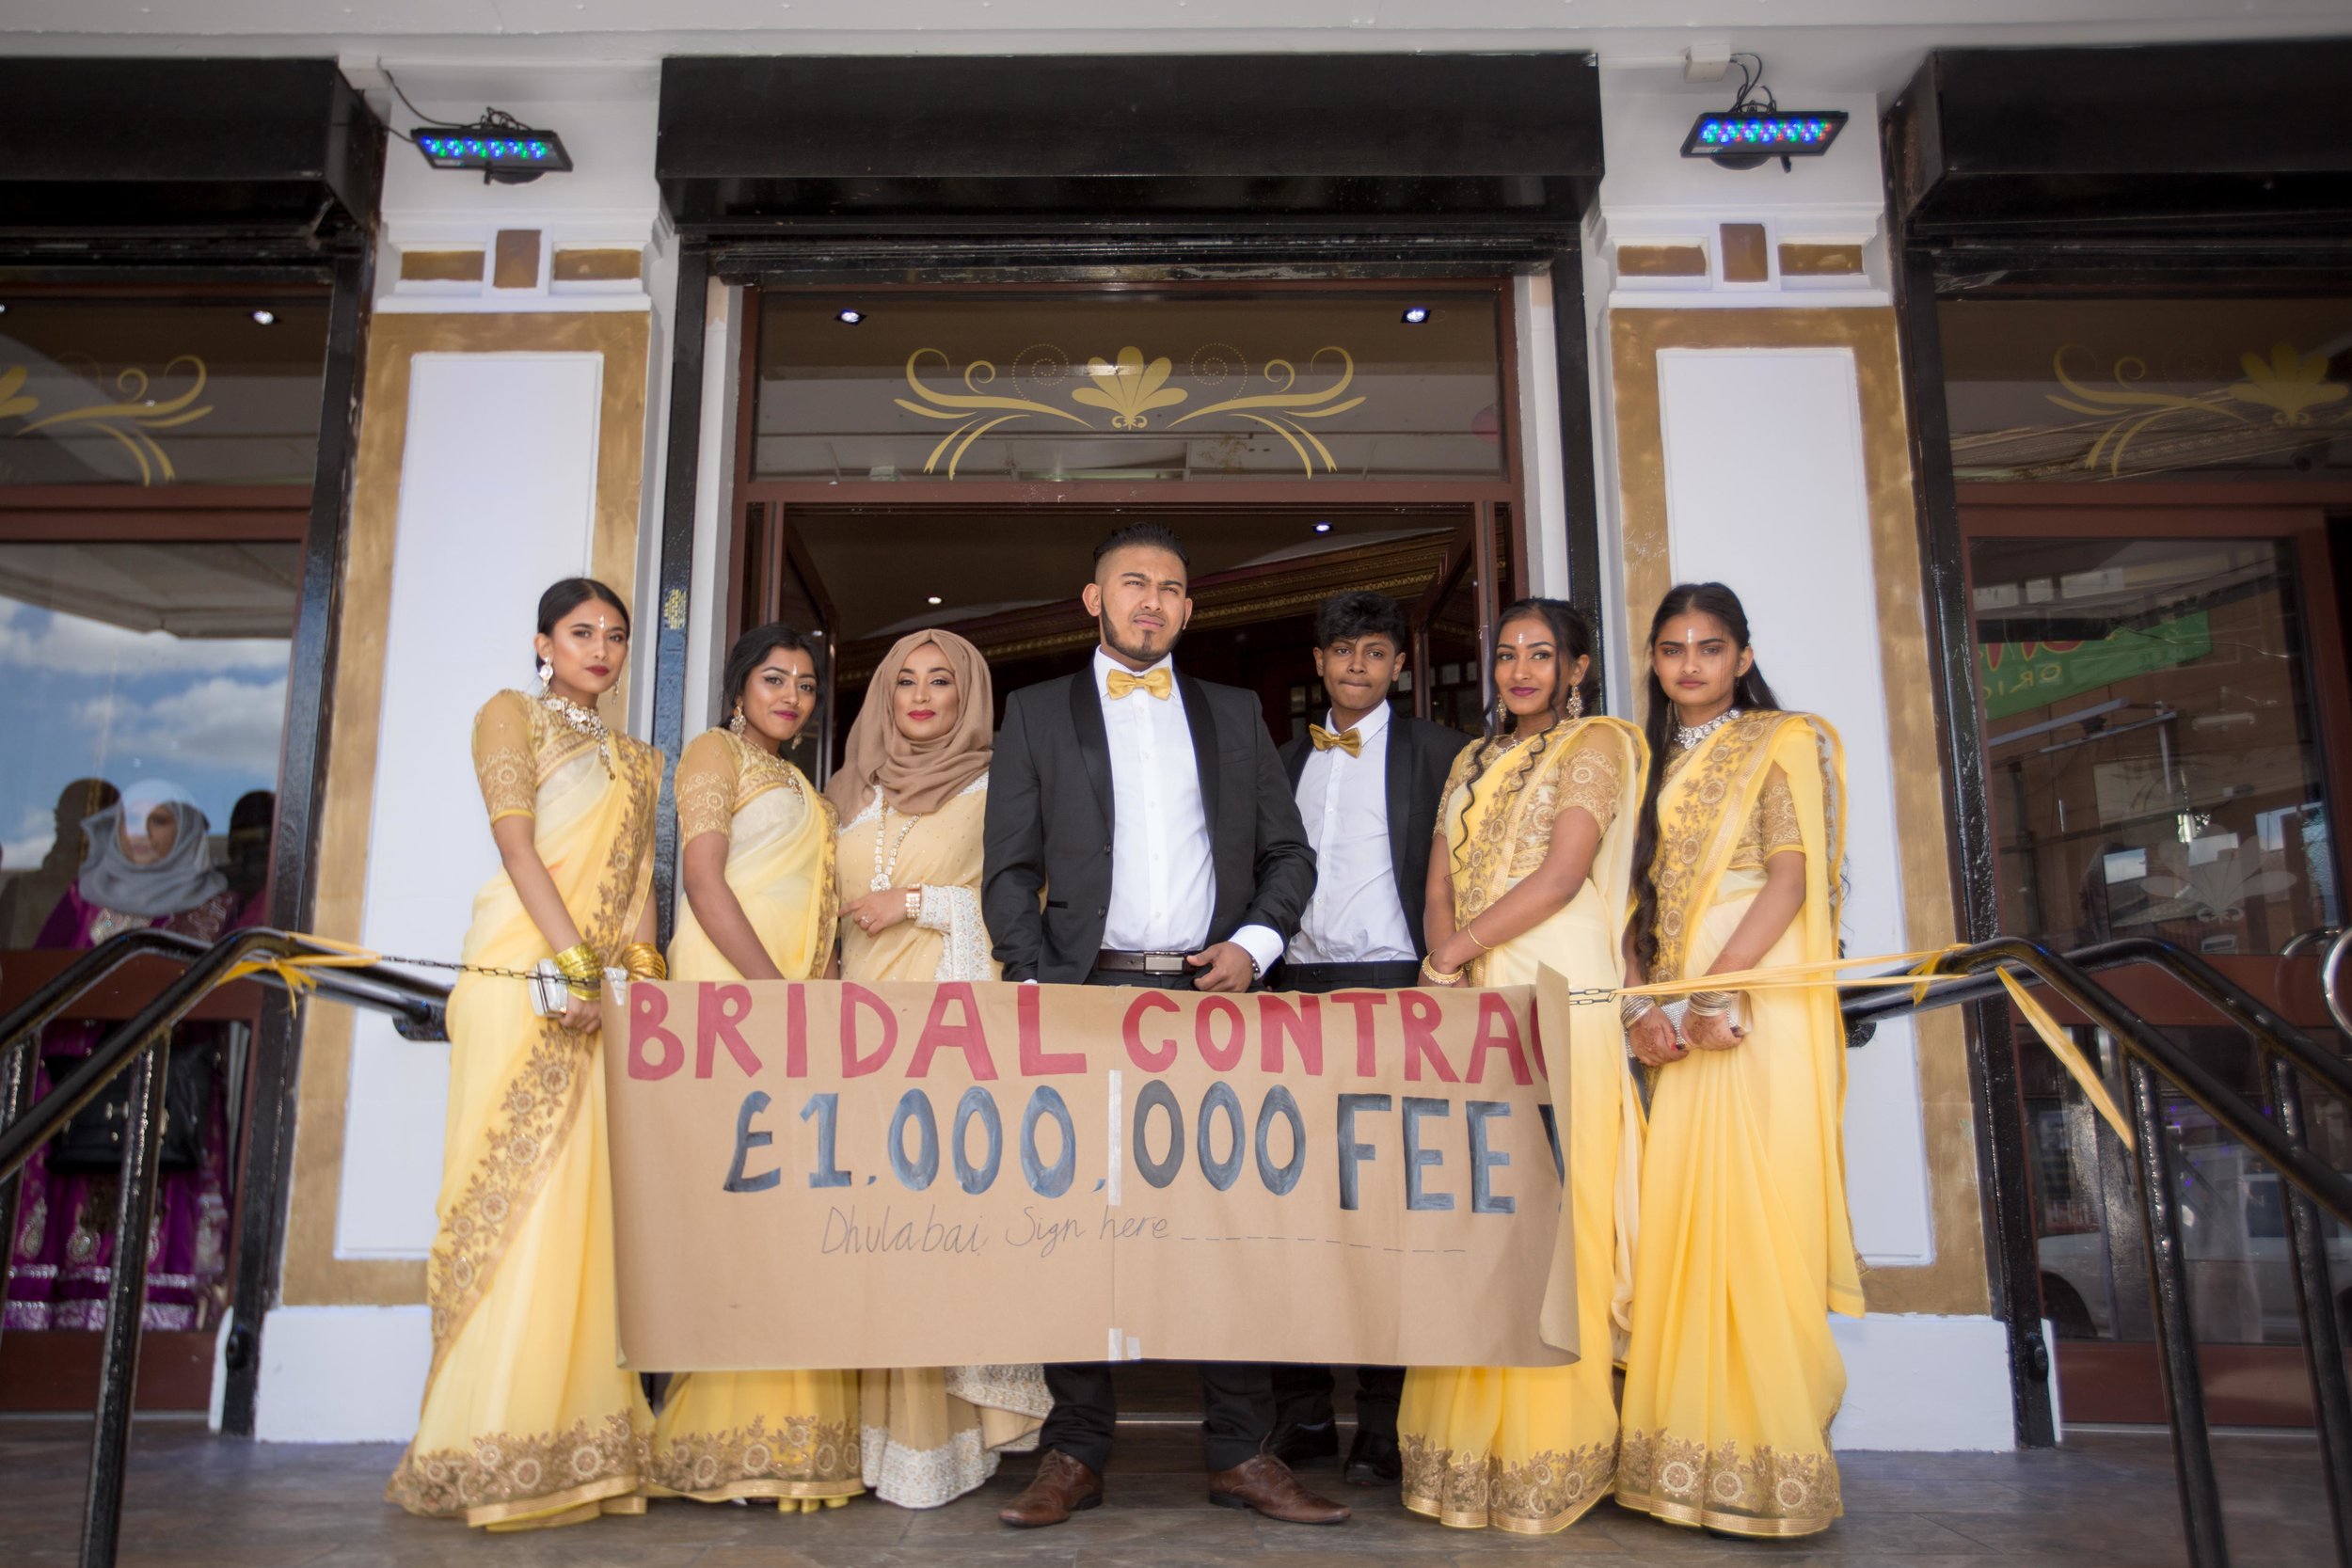 Female-Asian-Piccadilly-banqueting-suite-Wedding-Photographer-Birmingham-natalia-smith-photography-11.jpg